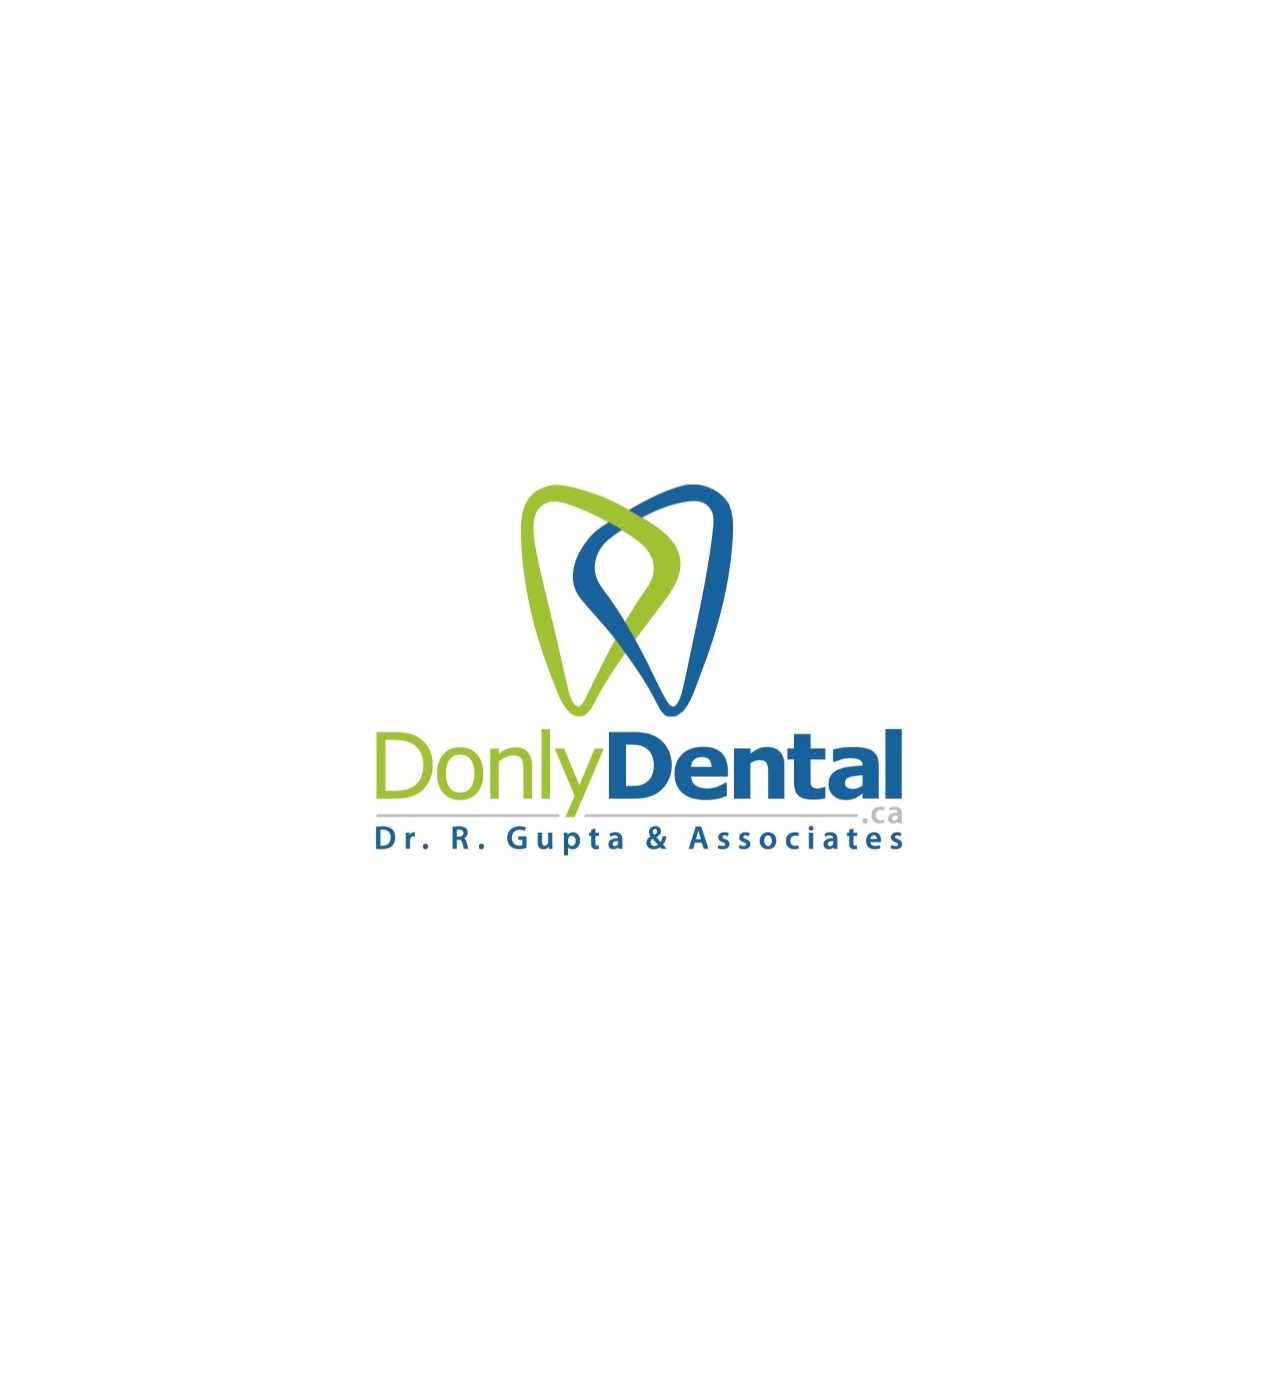 Donly Dental Logo